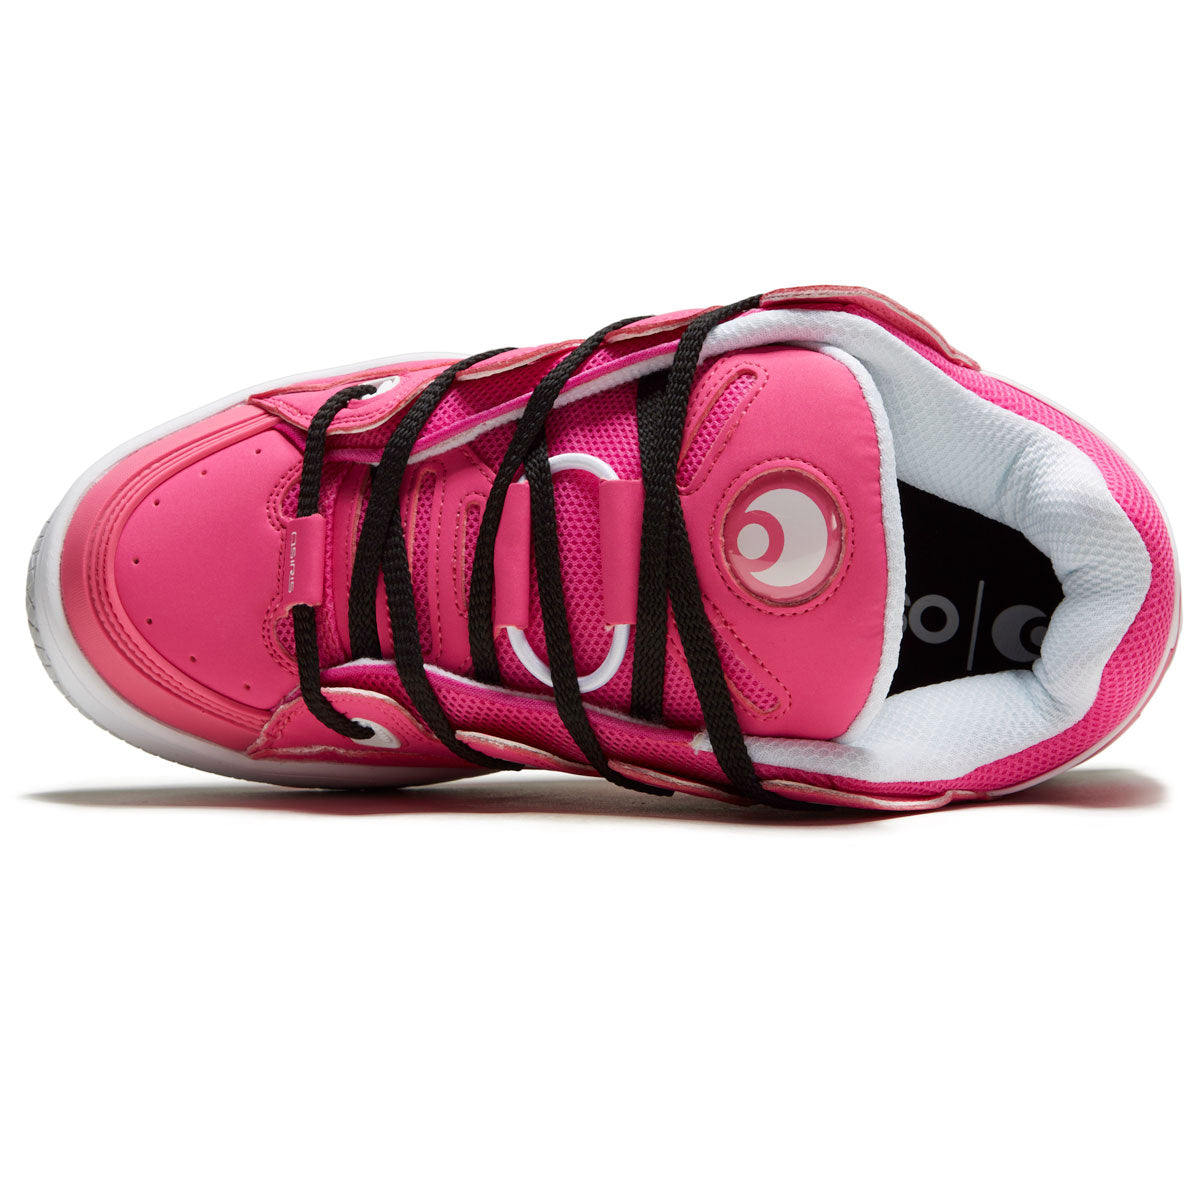 Osiris D3 Og Shoes - Pink/Pink/Grey image 3